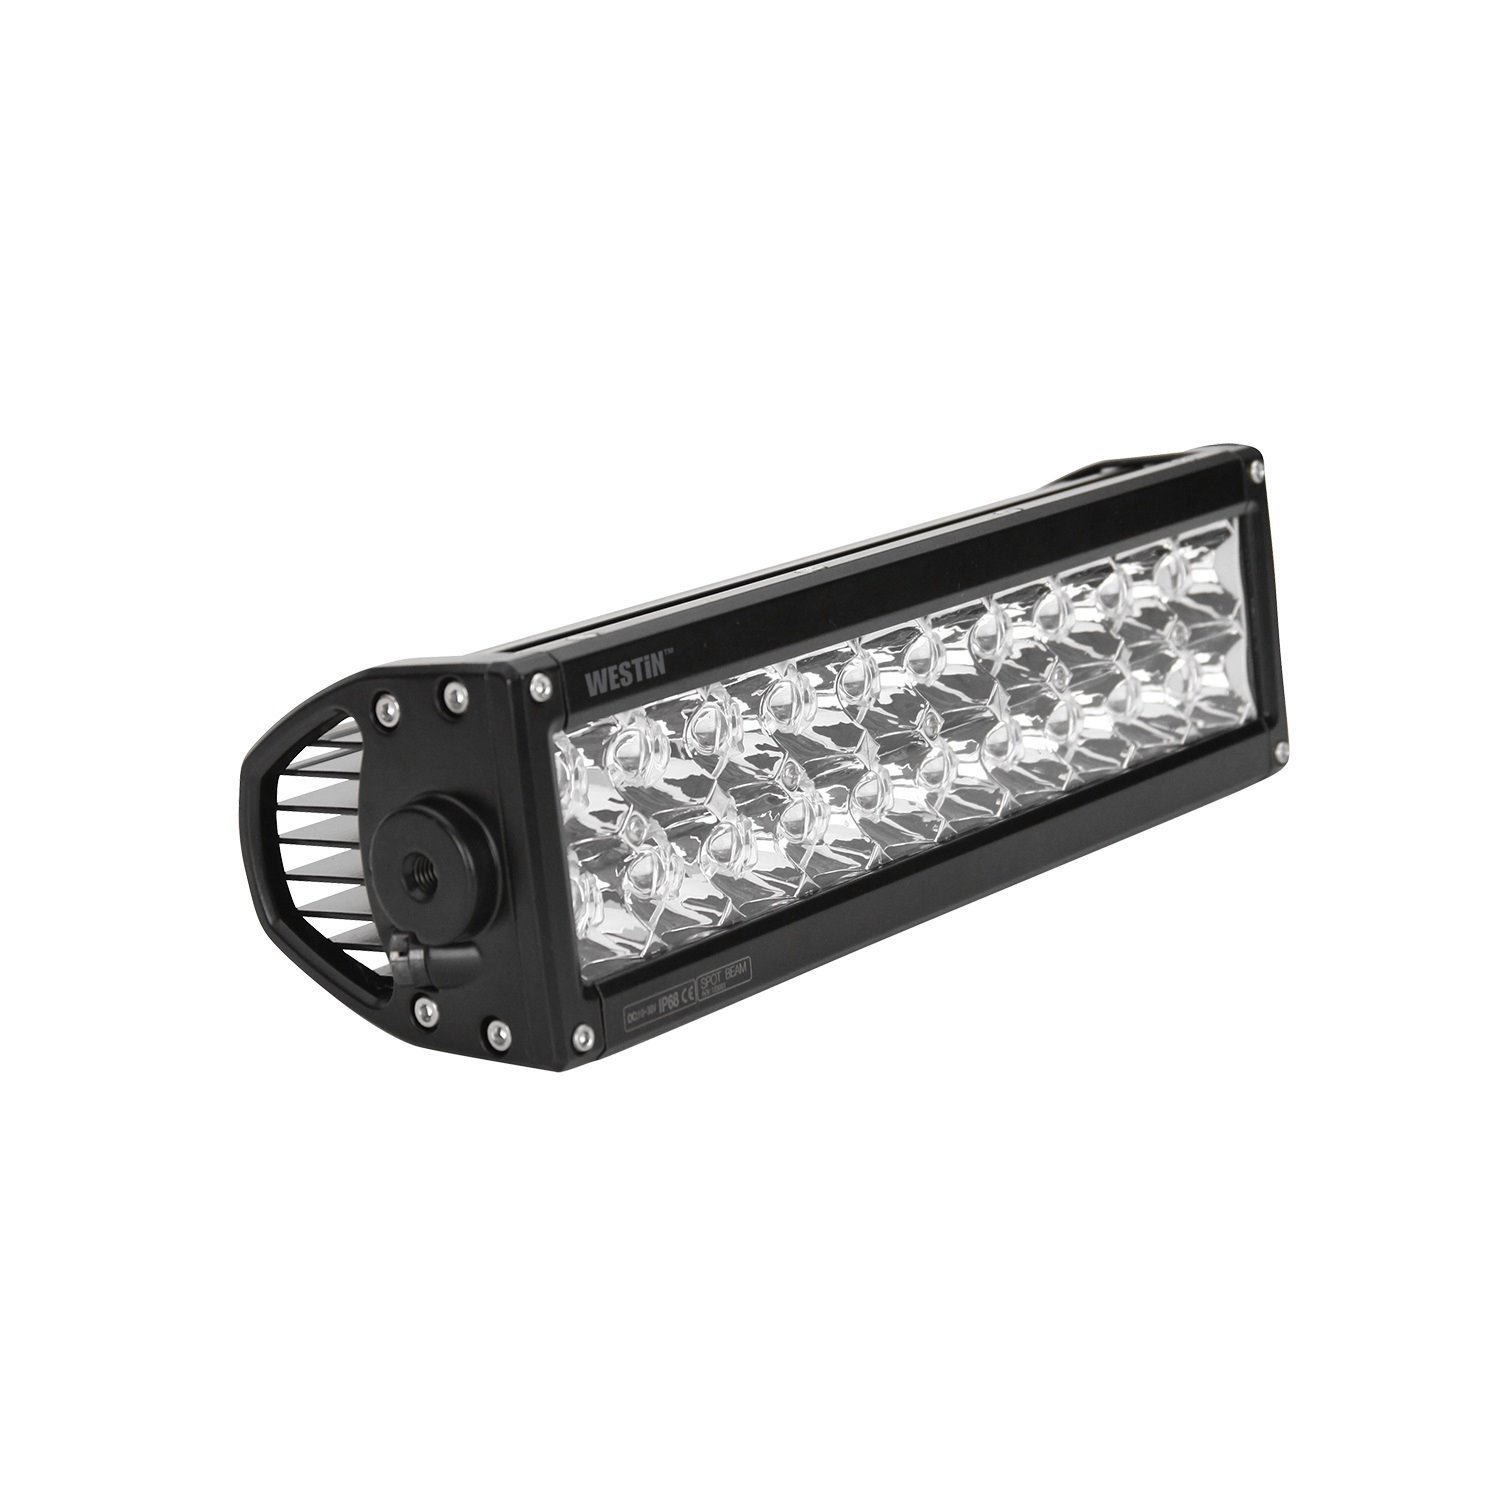 Low-Profile Double-Row LED Light Bar 10